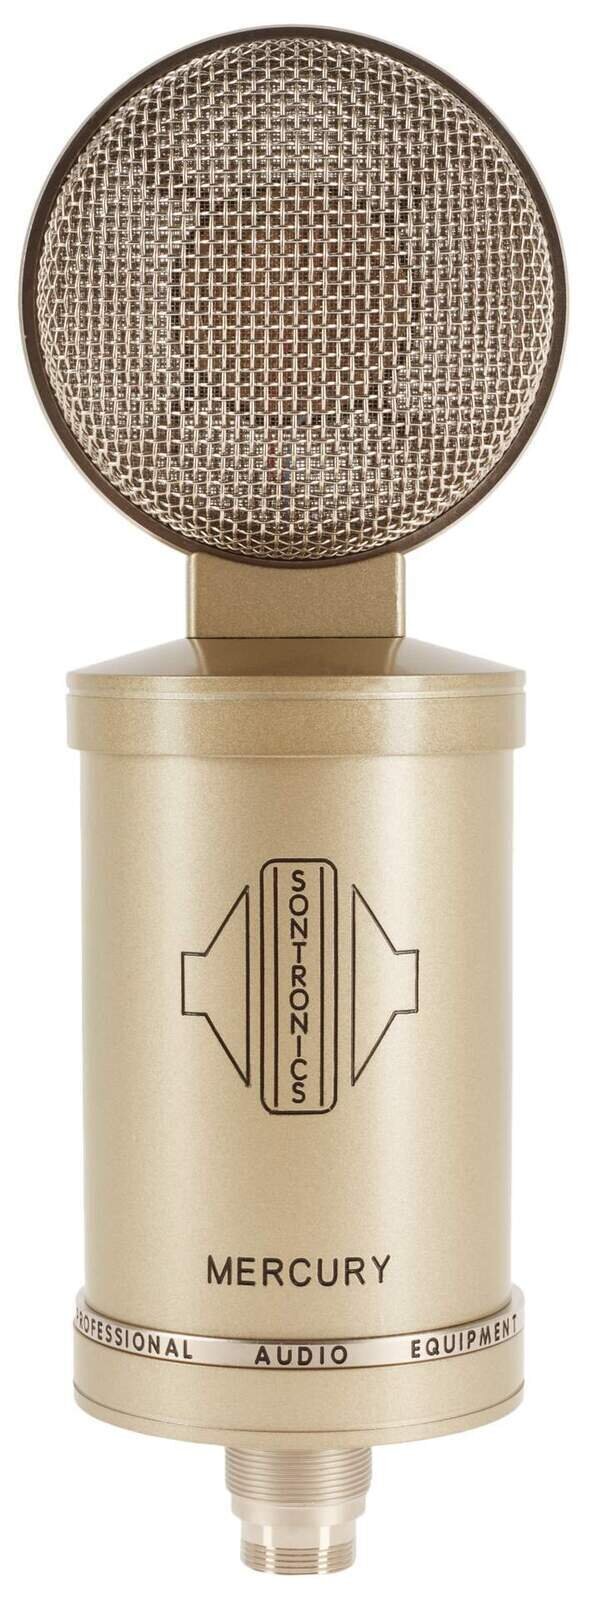 Microfone condensador de estúdio Sontronics Mercury Microfone condensador de estúdio